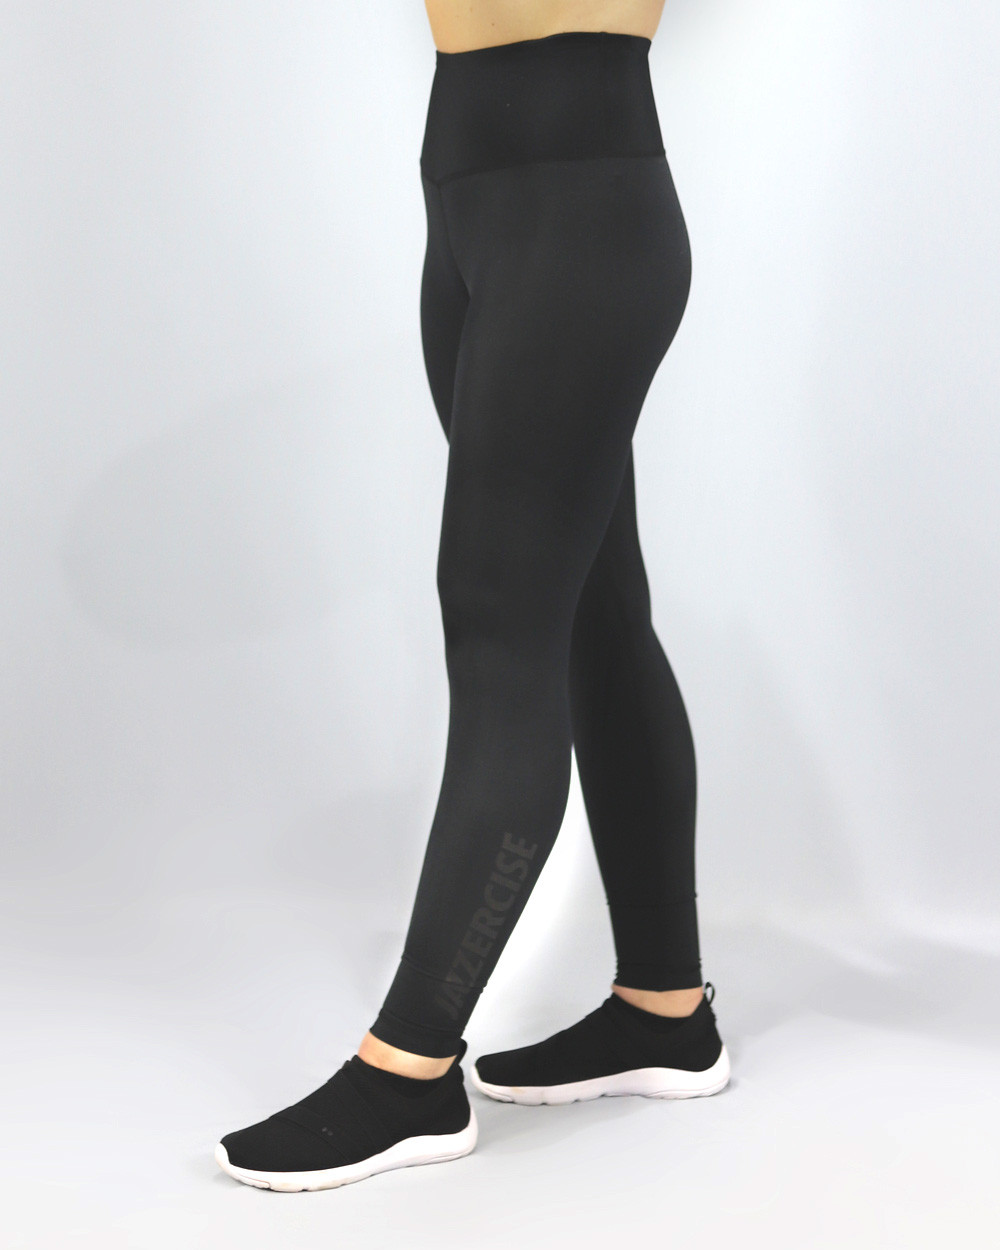 90 Degrees by Reflex Capri Athletic Leggings Black Size XS - $14 - From Reis